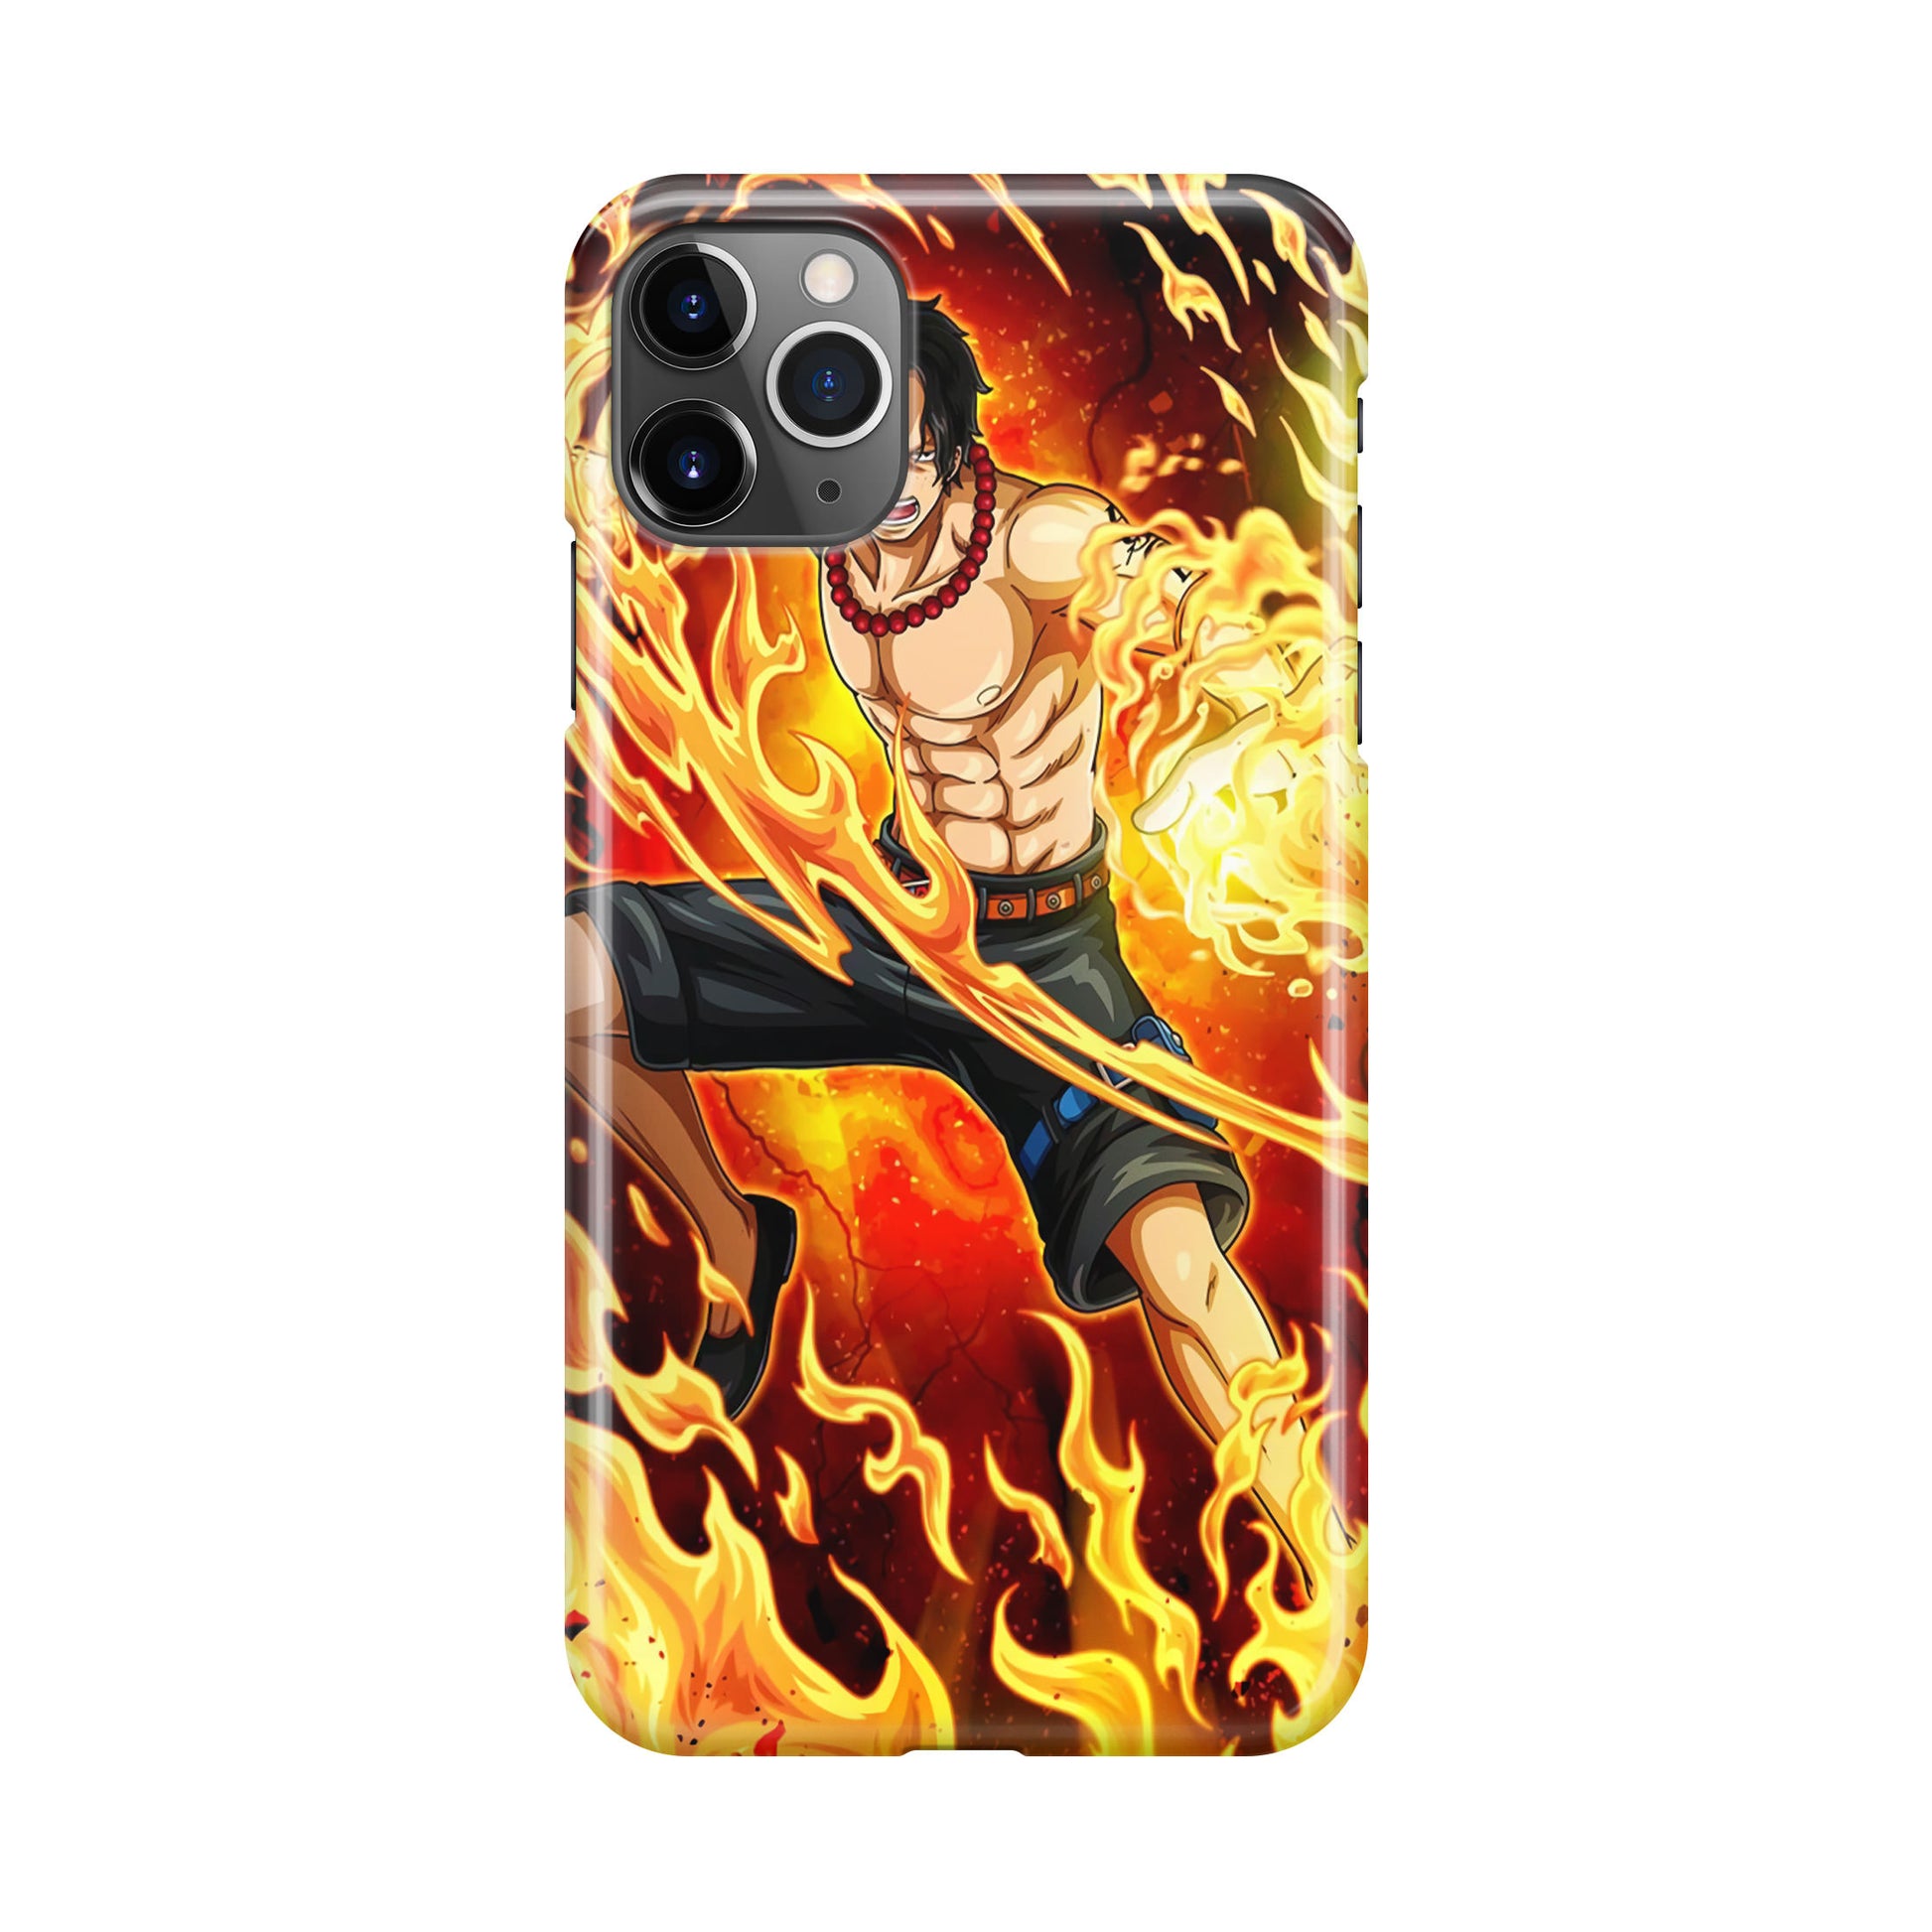 Ace Fire Fist iPhone 11 Pro Case